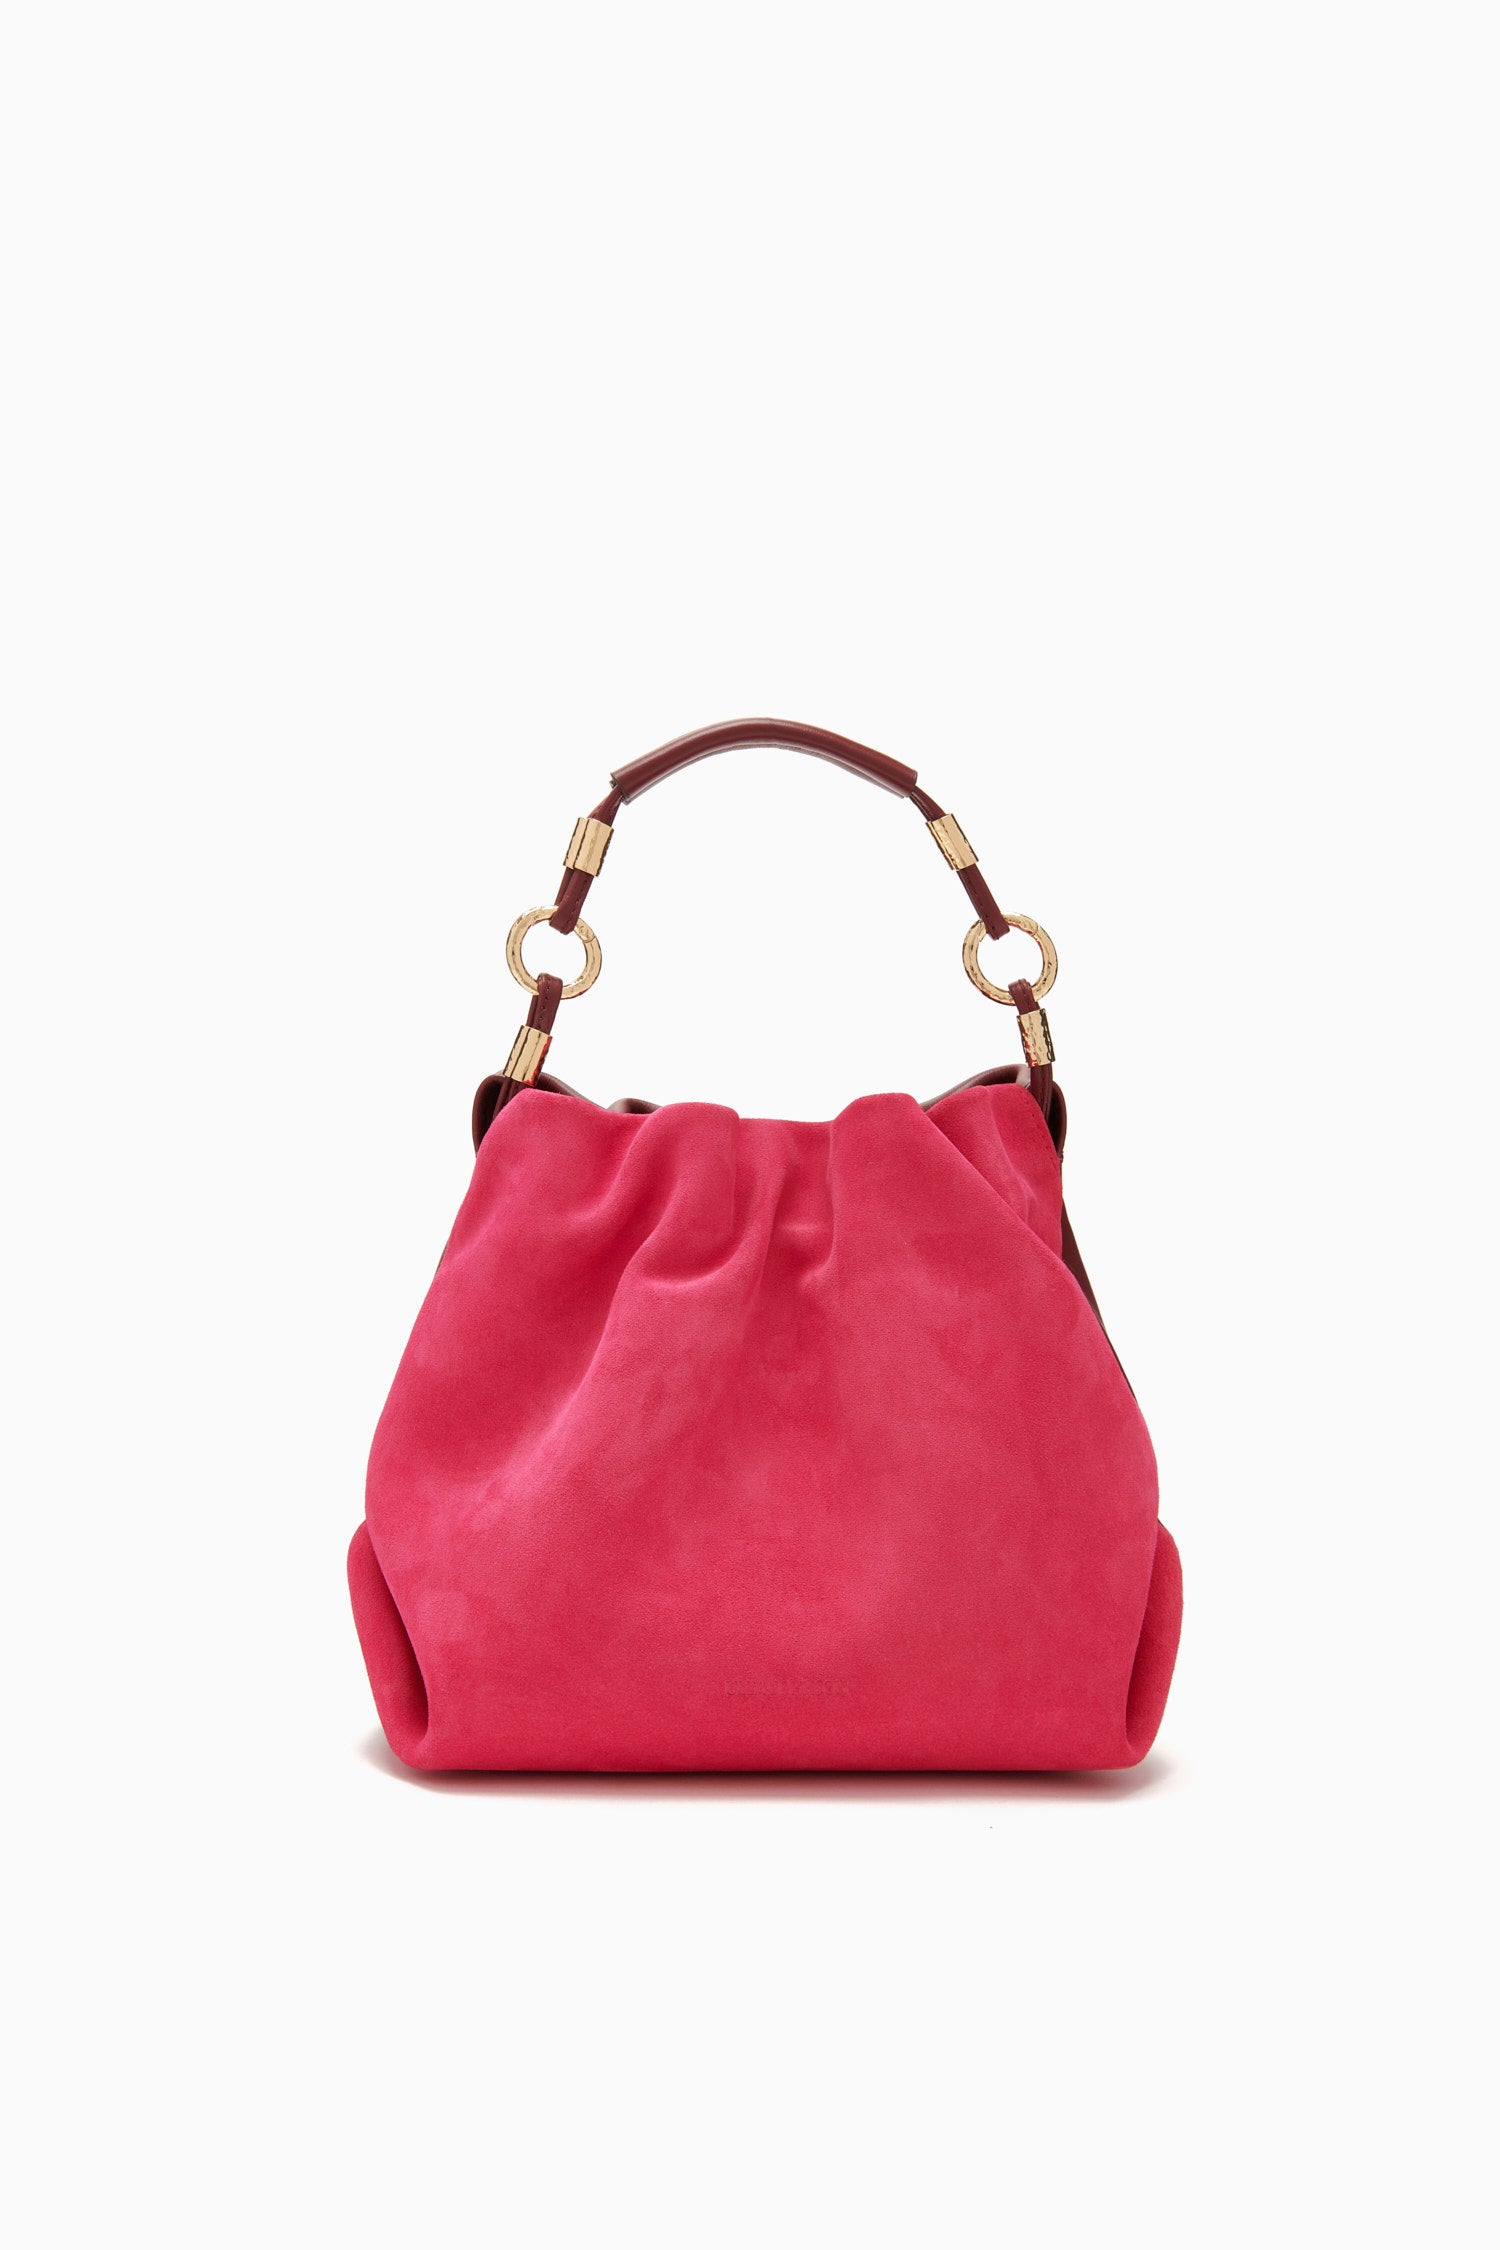 Burkina Leather Bag Togo - Pink Interior